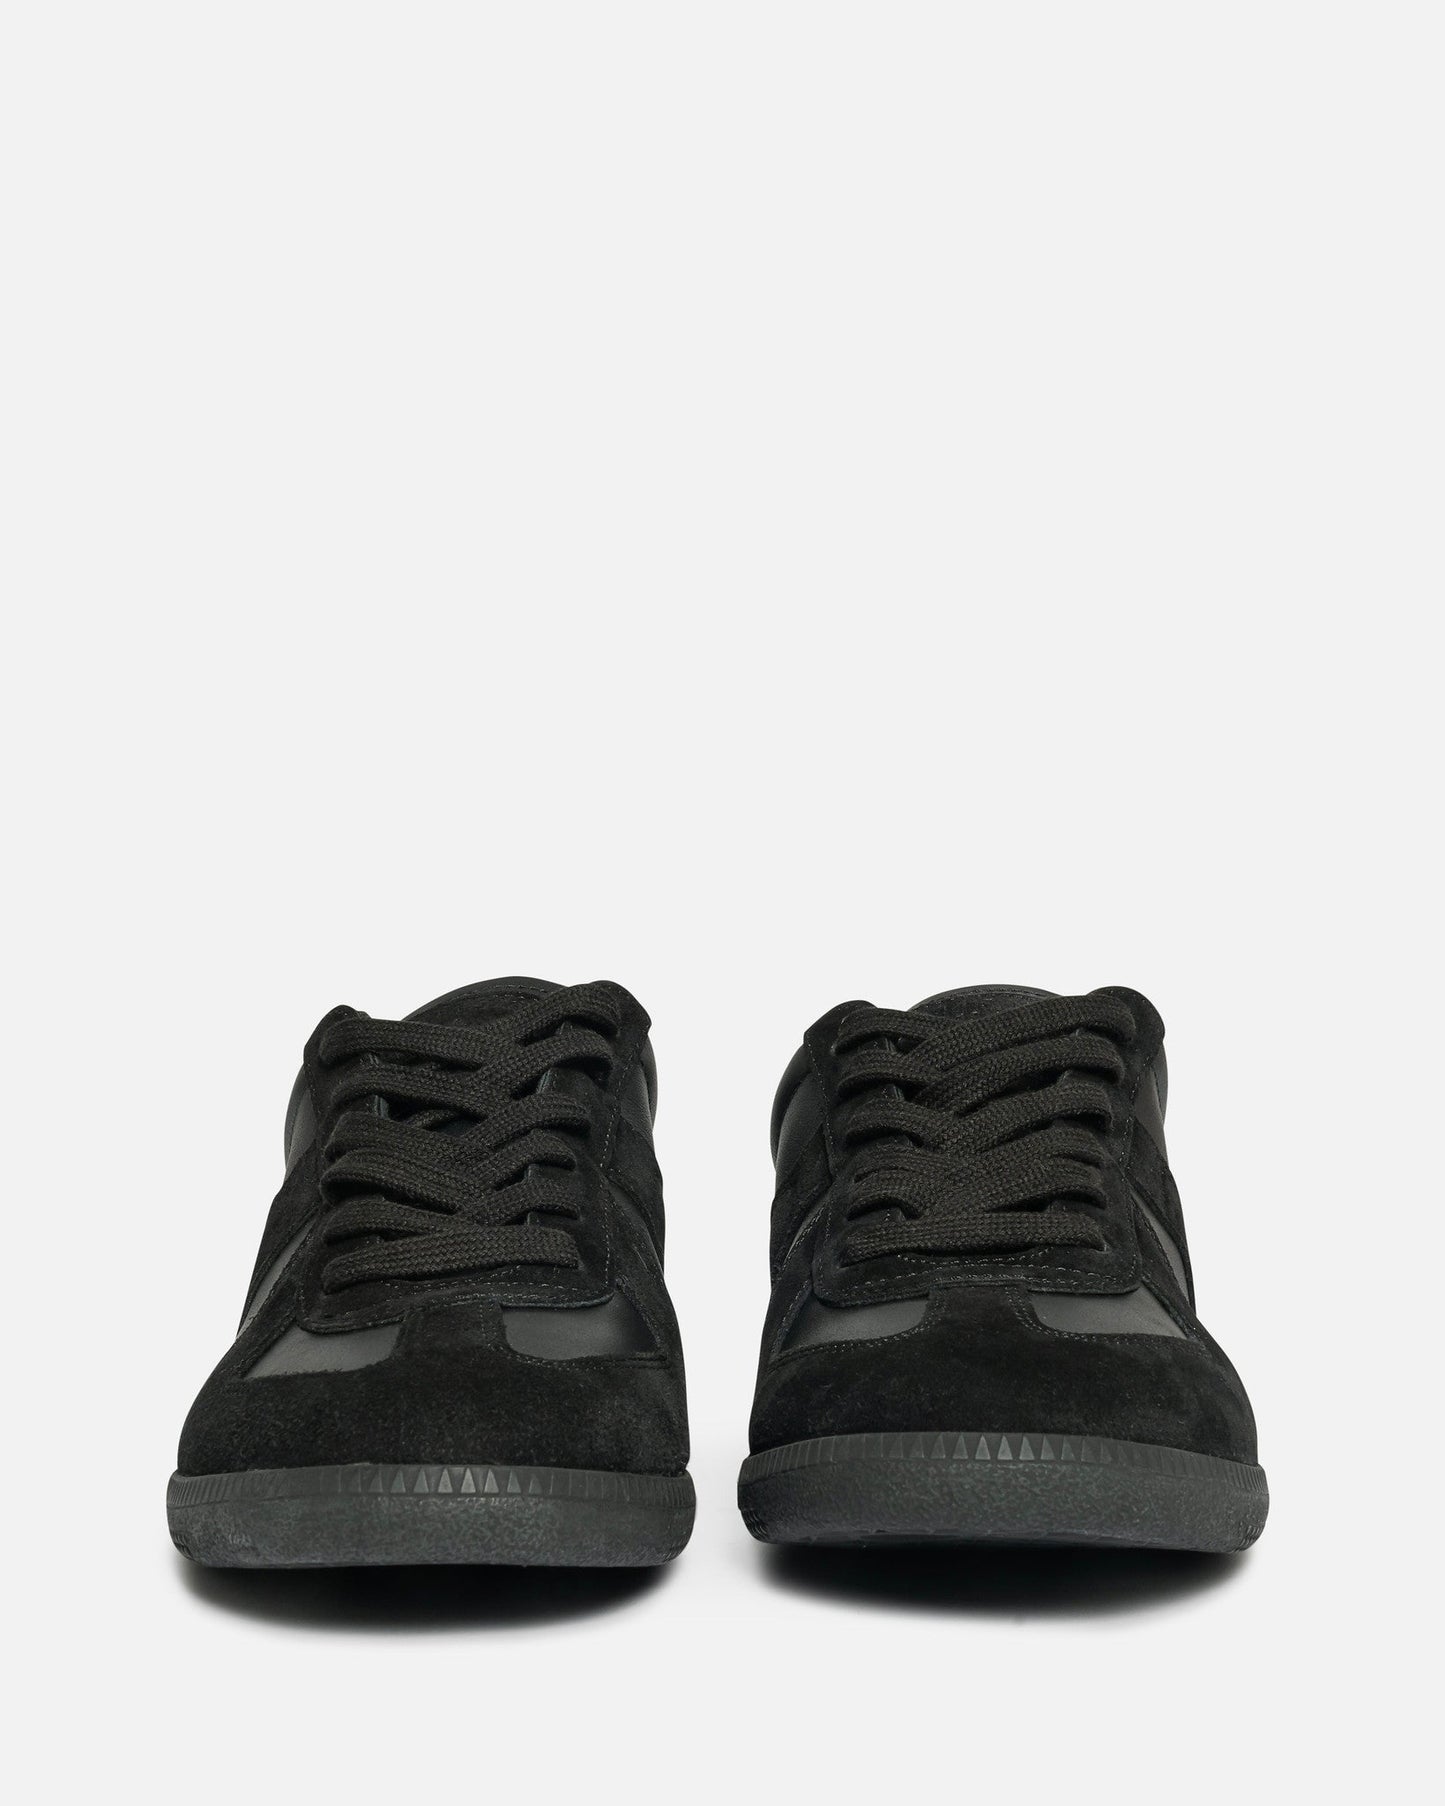 Maison Margiela Men's Sneakers Replica Sneakers in Black/Black